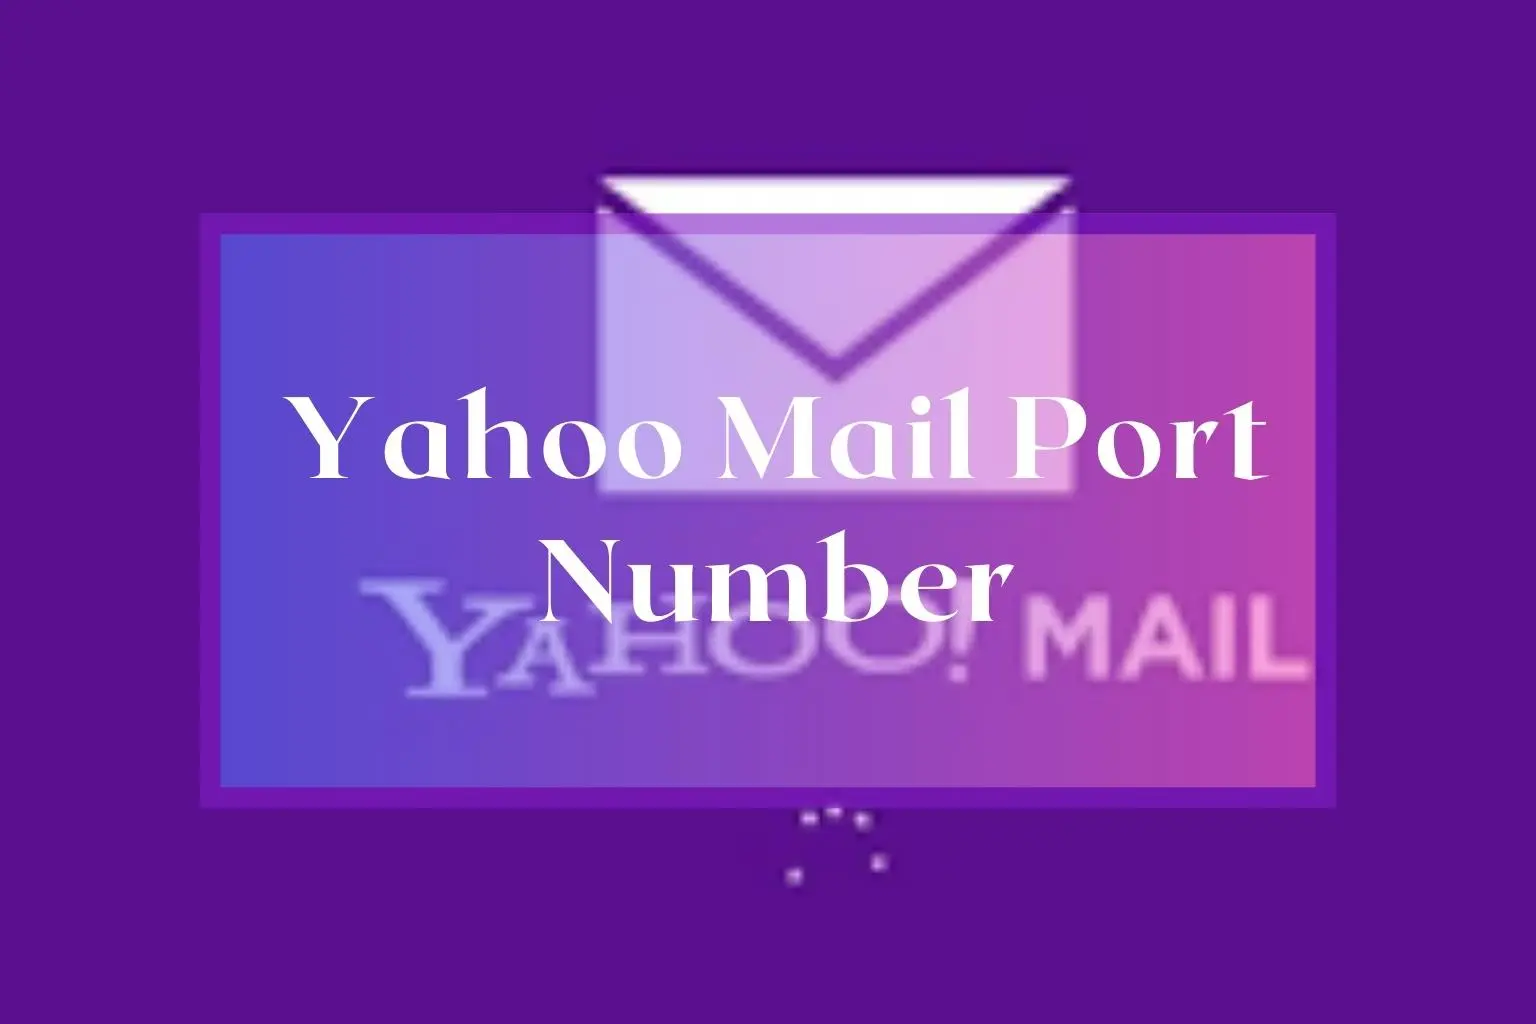 Yahoo Mail Port Number